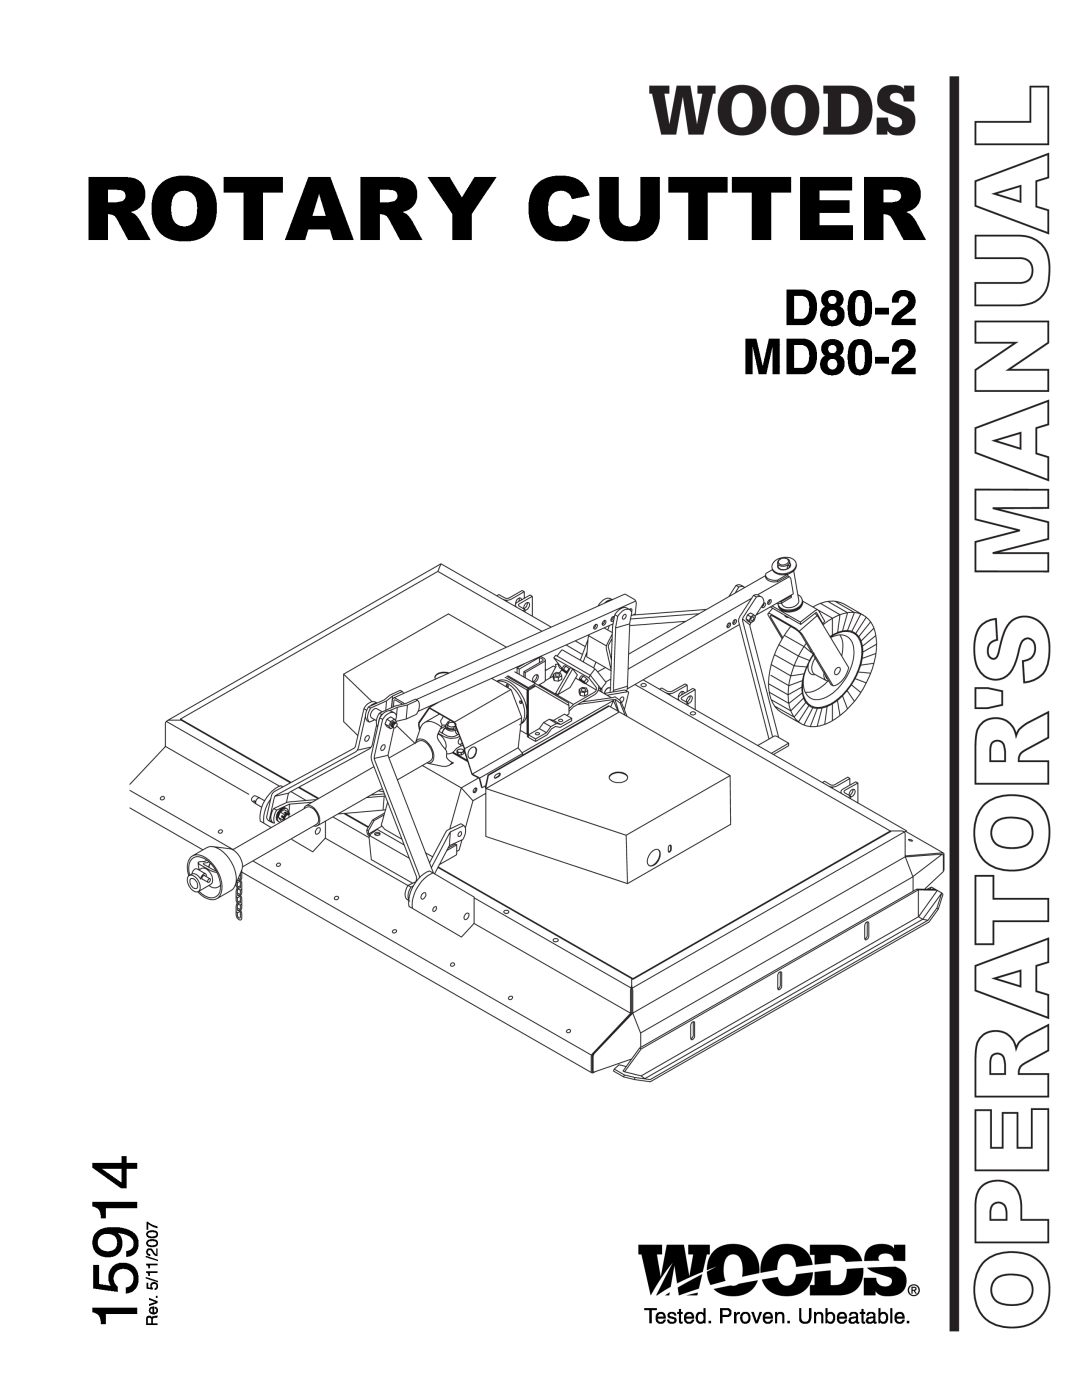 Woods Equipment manual Rotary Cutter, 15914, D80-2 MD80-2, Operators Manual 